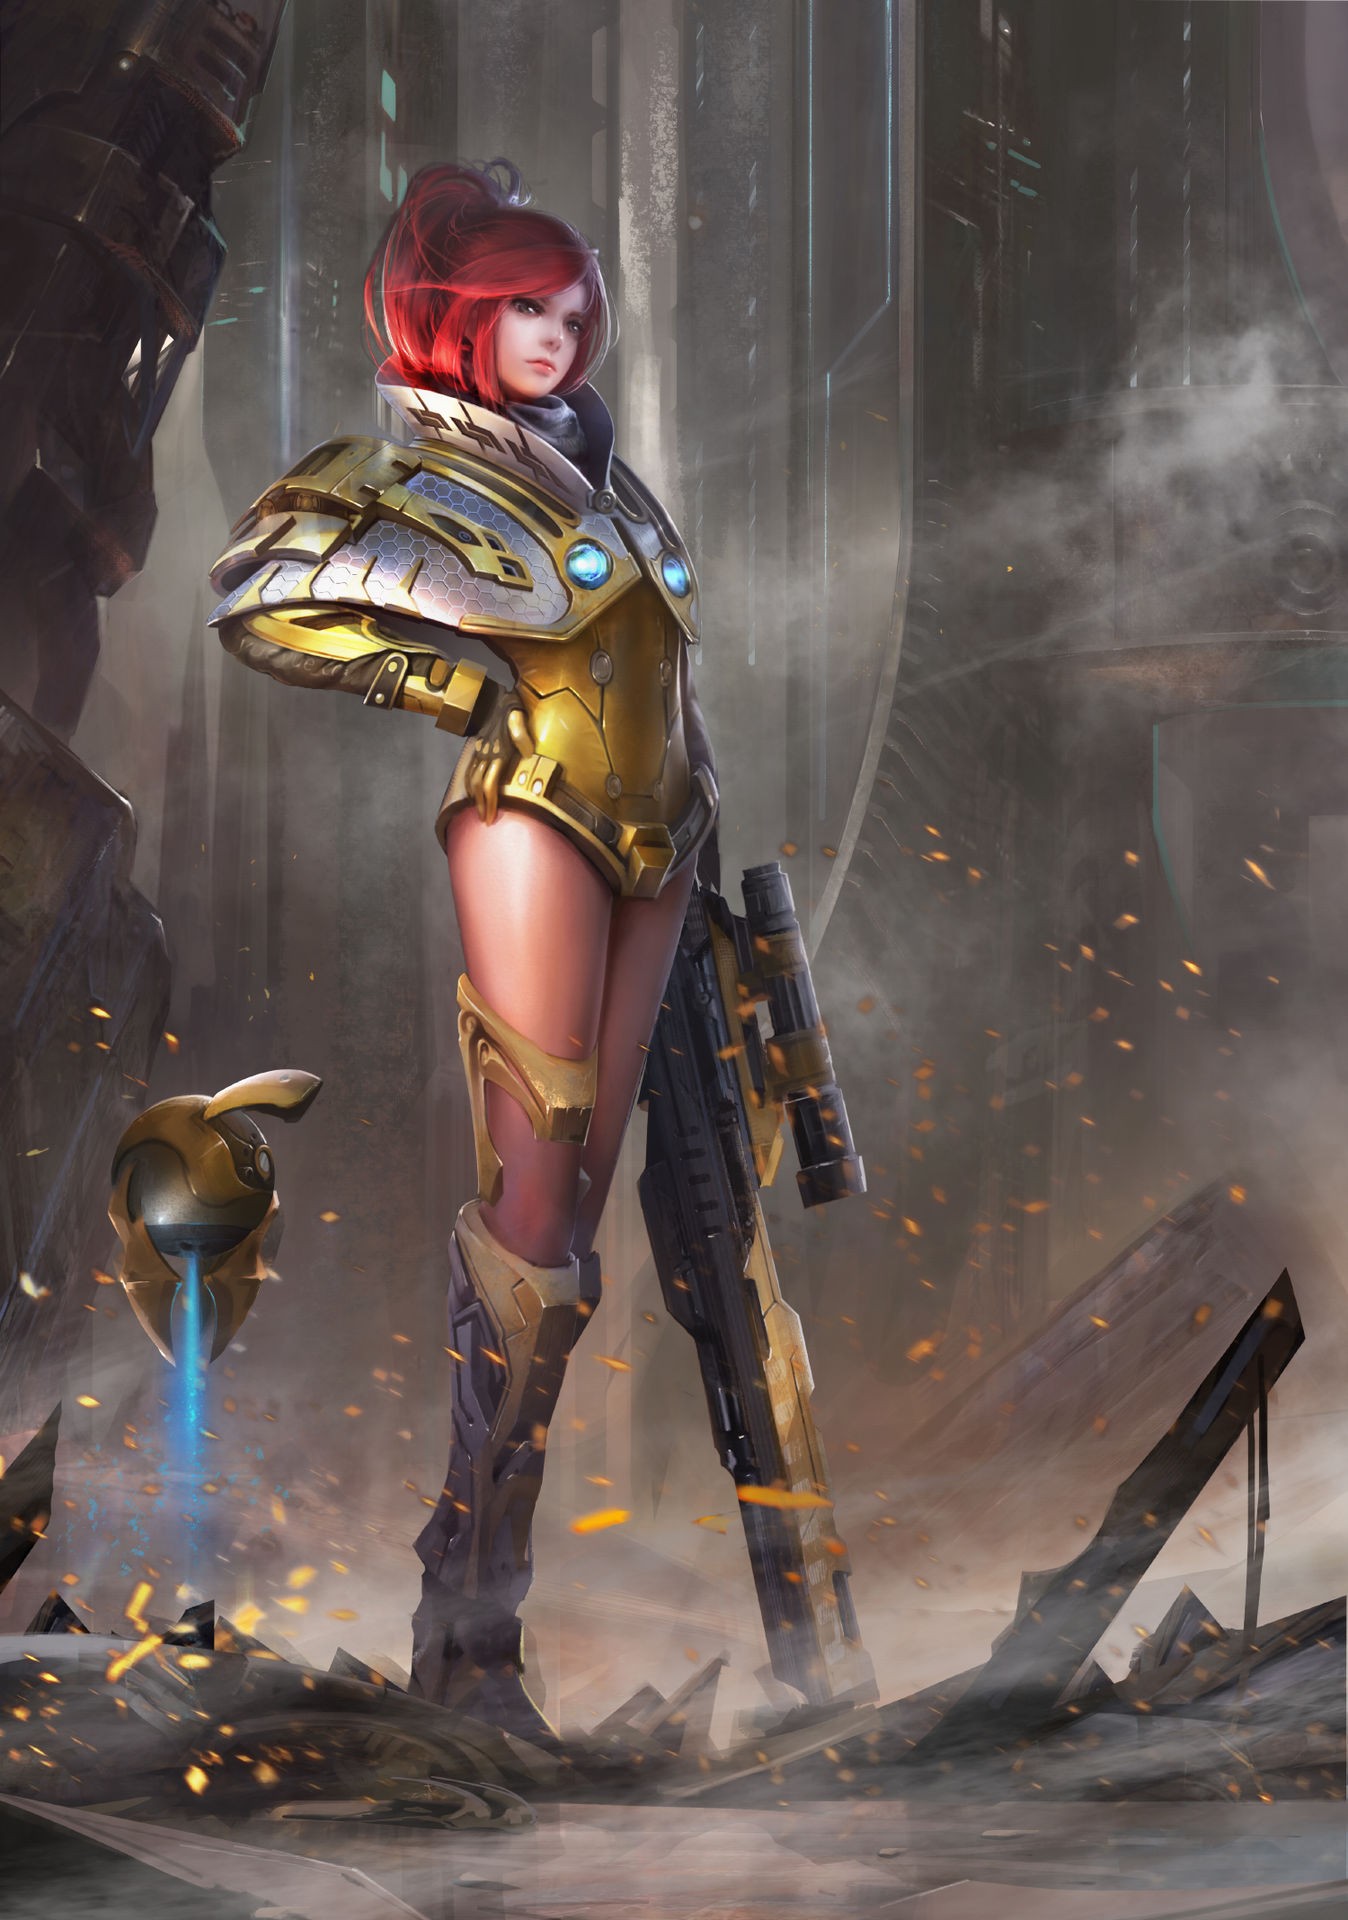 General 1348x1920 weapon redhead artwork women girls with guns futuristic armor armor armored science fiction women